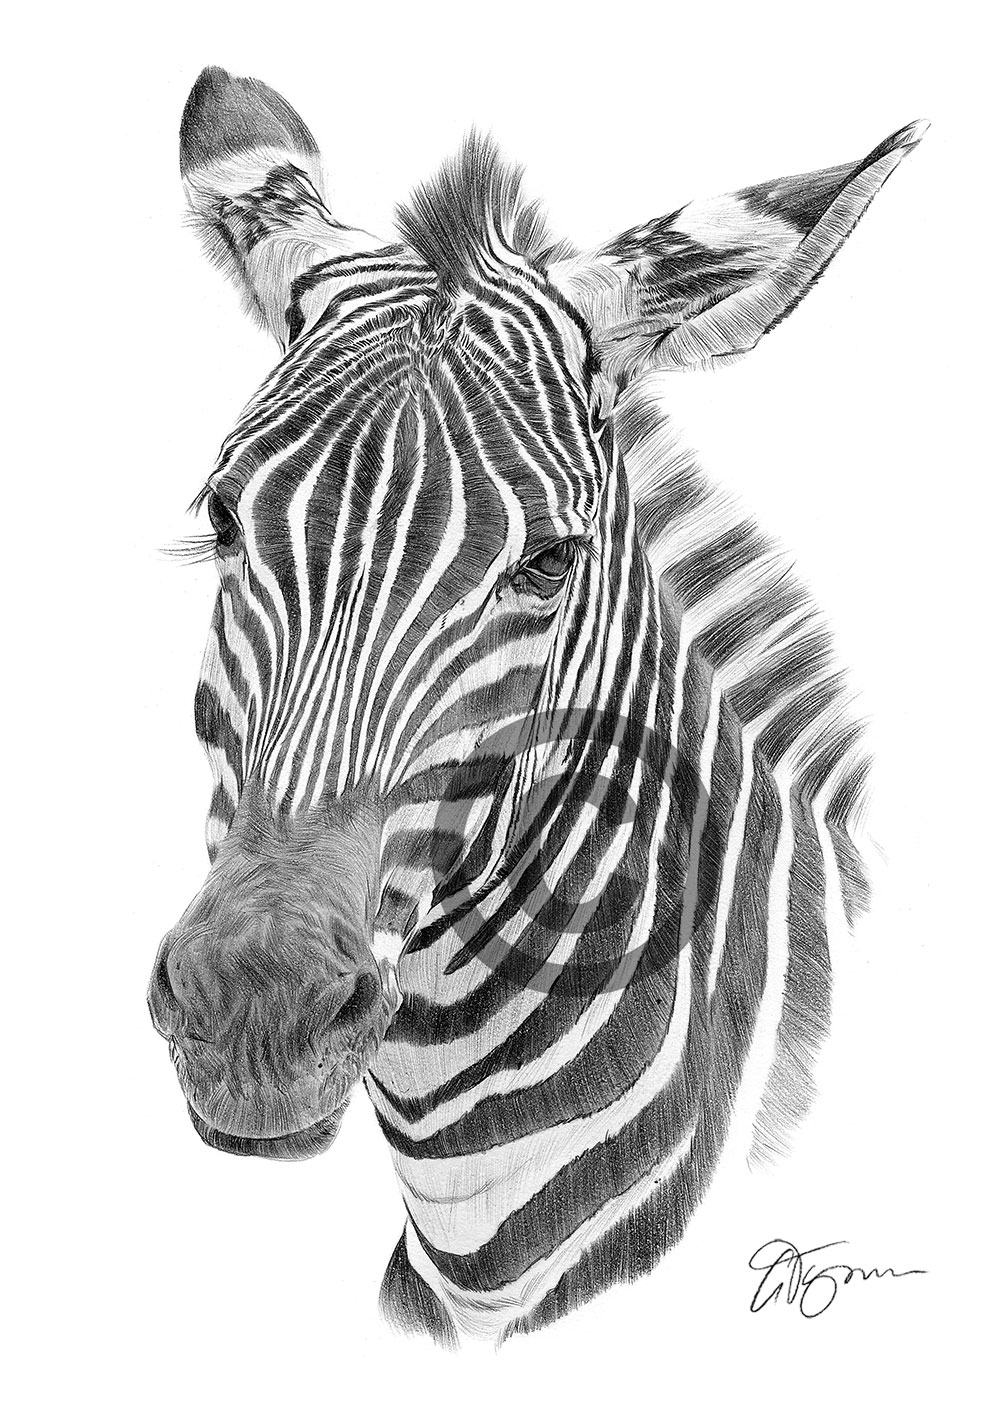 Pencil drawing of a zebra by artist Gary Tymon